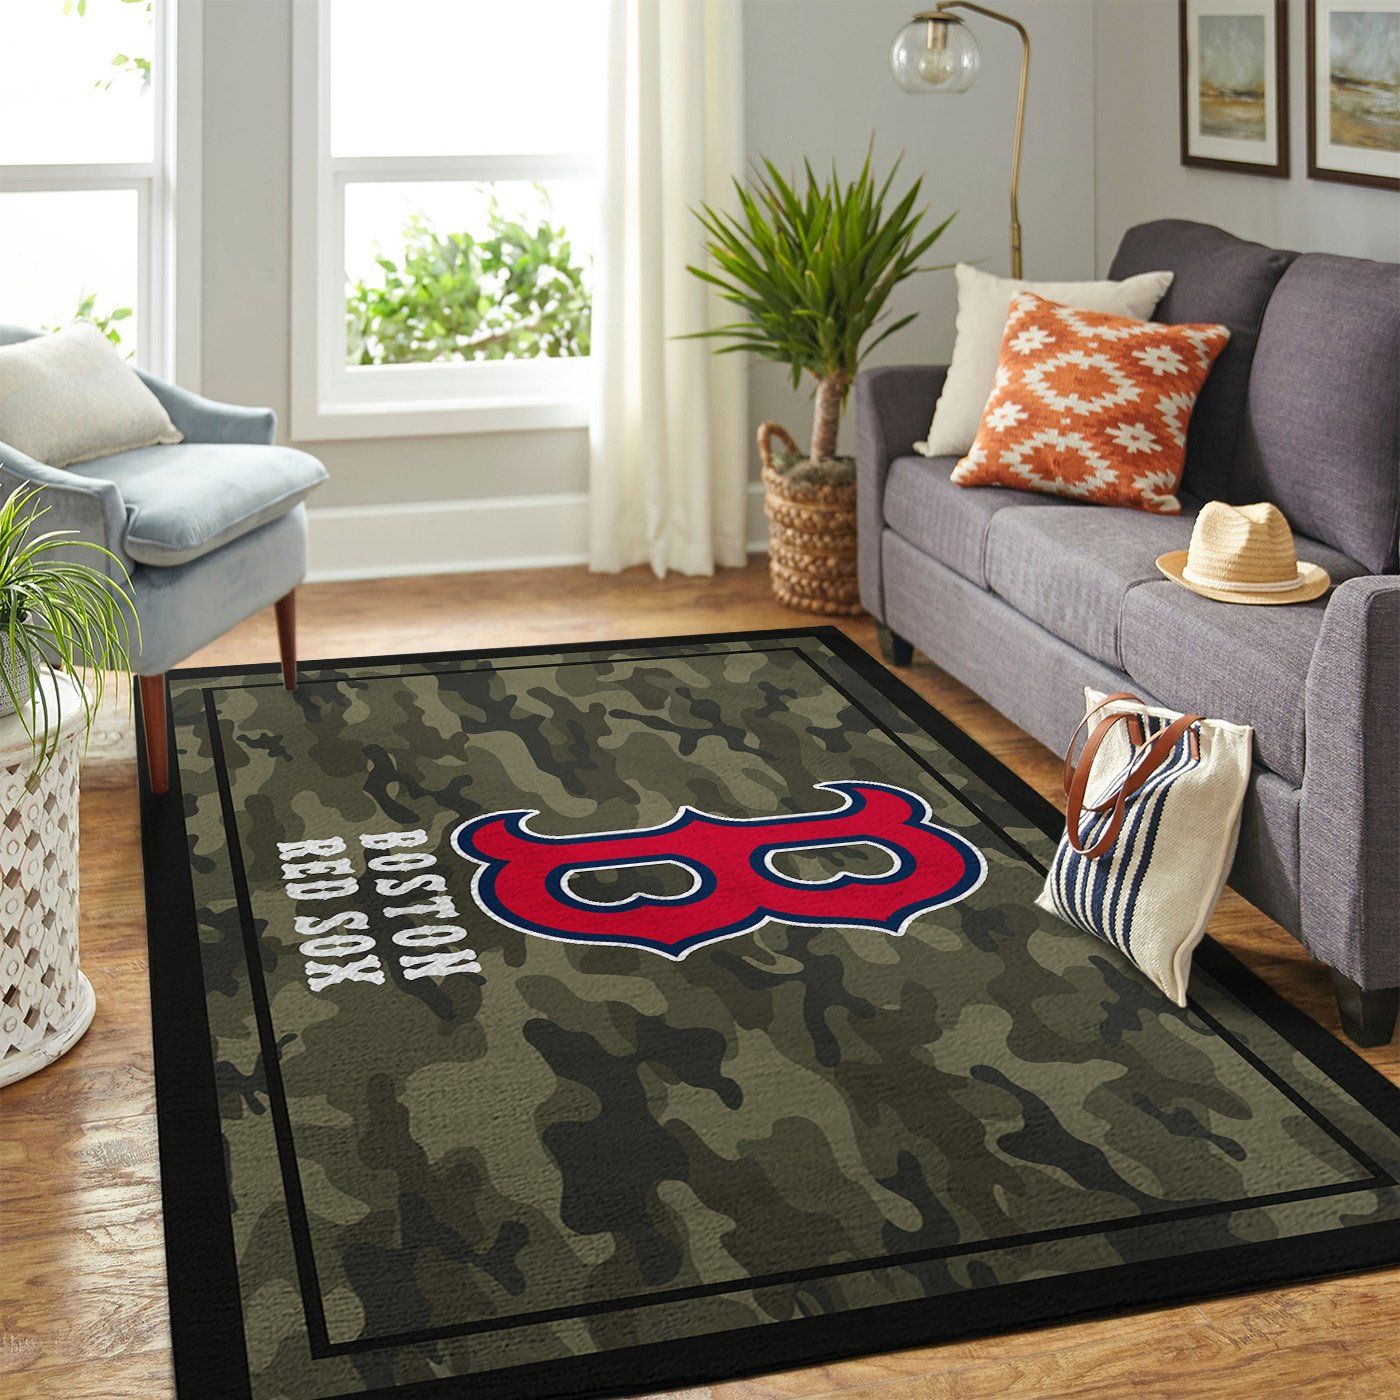 https://www.travelsintranslation.com/wp-content/uploads/2021/03/Boston-Red-Sox-Mlb-Team-Logo-Camo-Style-Nice-Gift-Home-Decor-Rectangle-Area-Rug.jpg